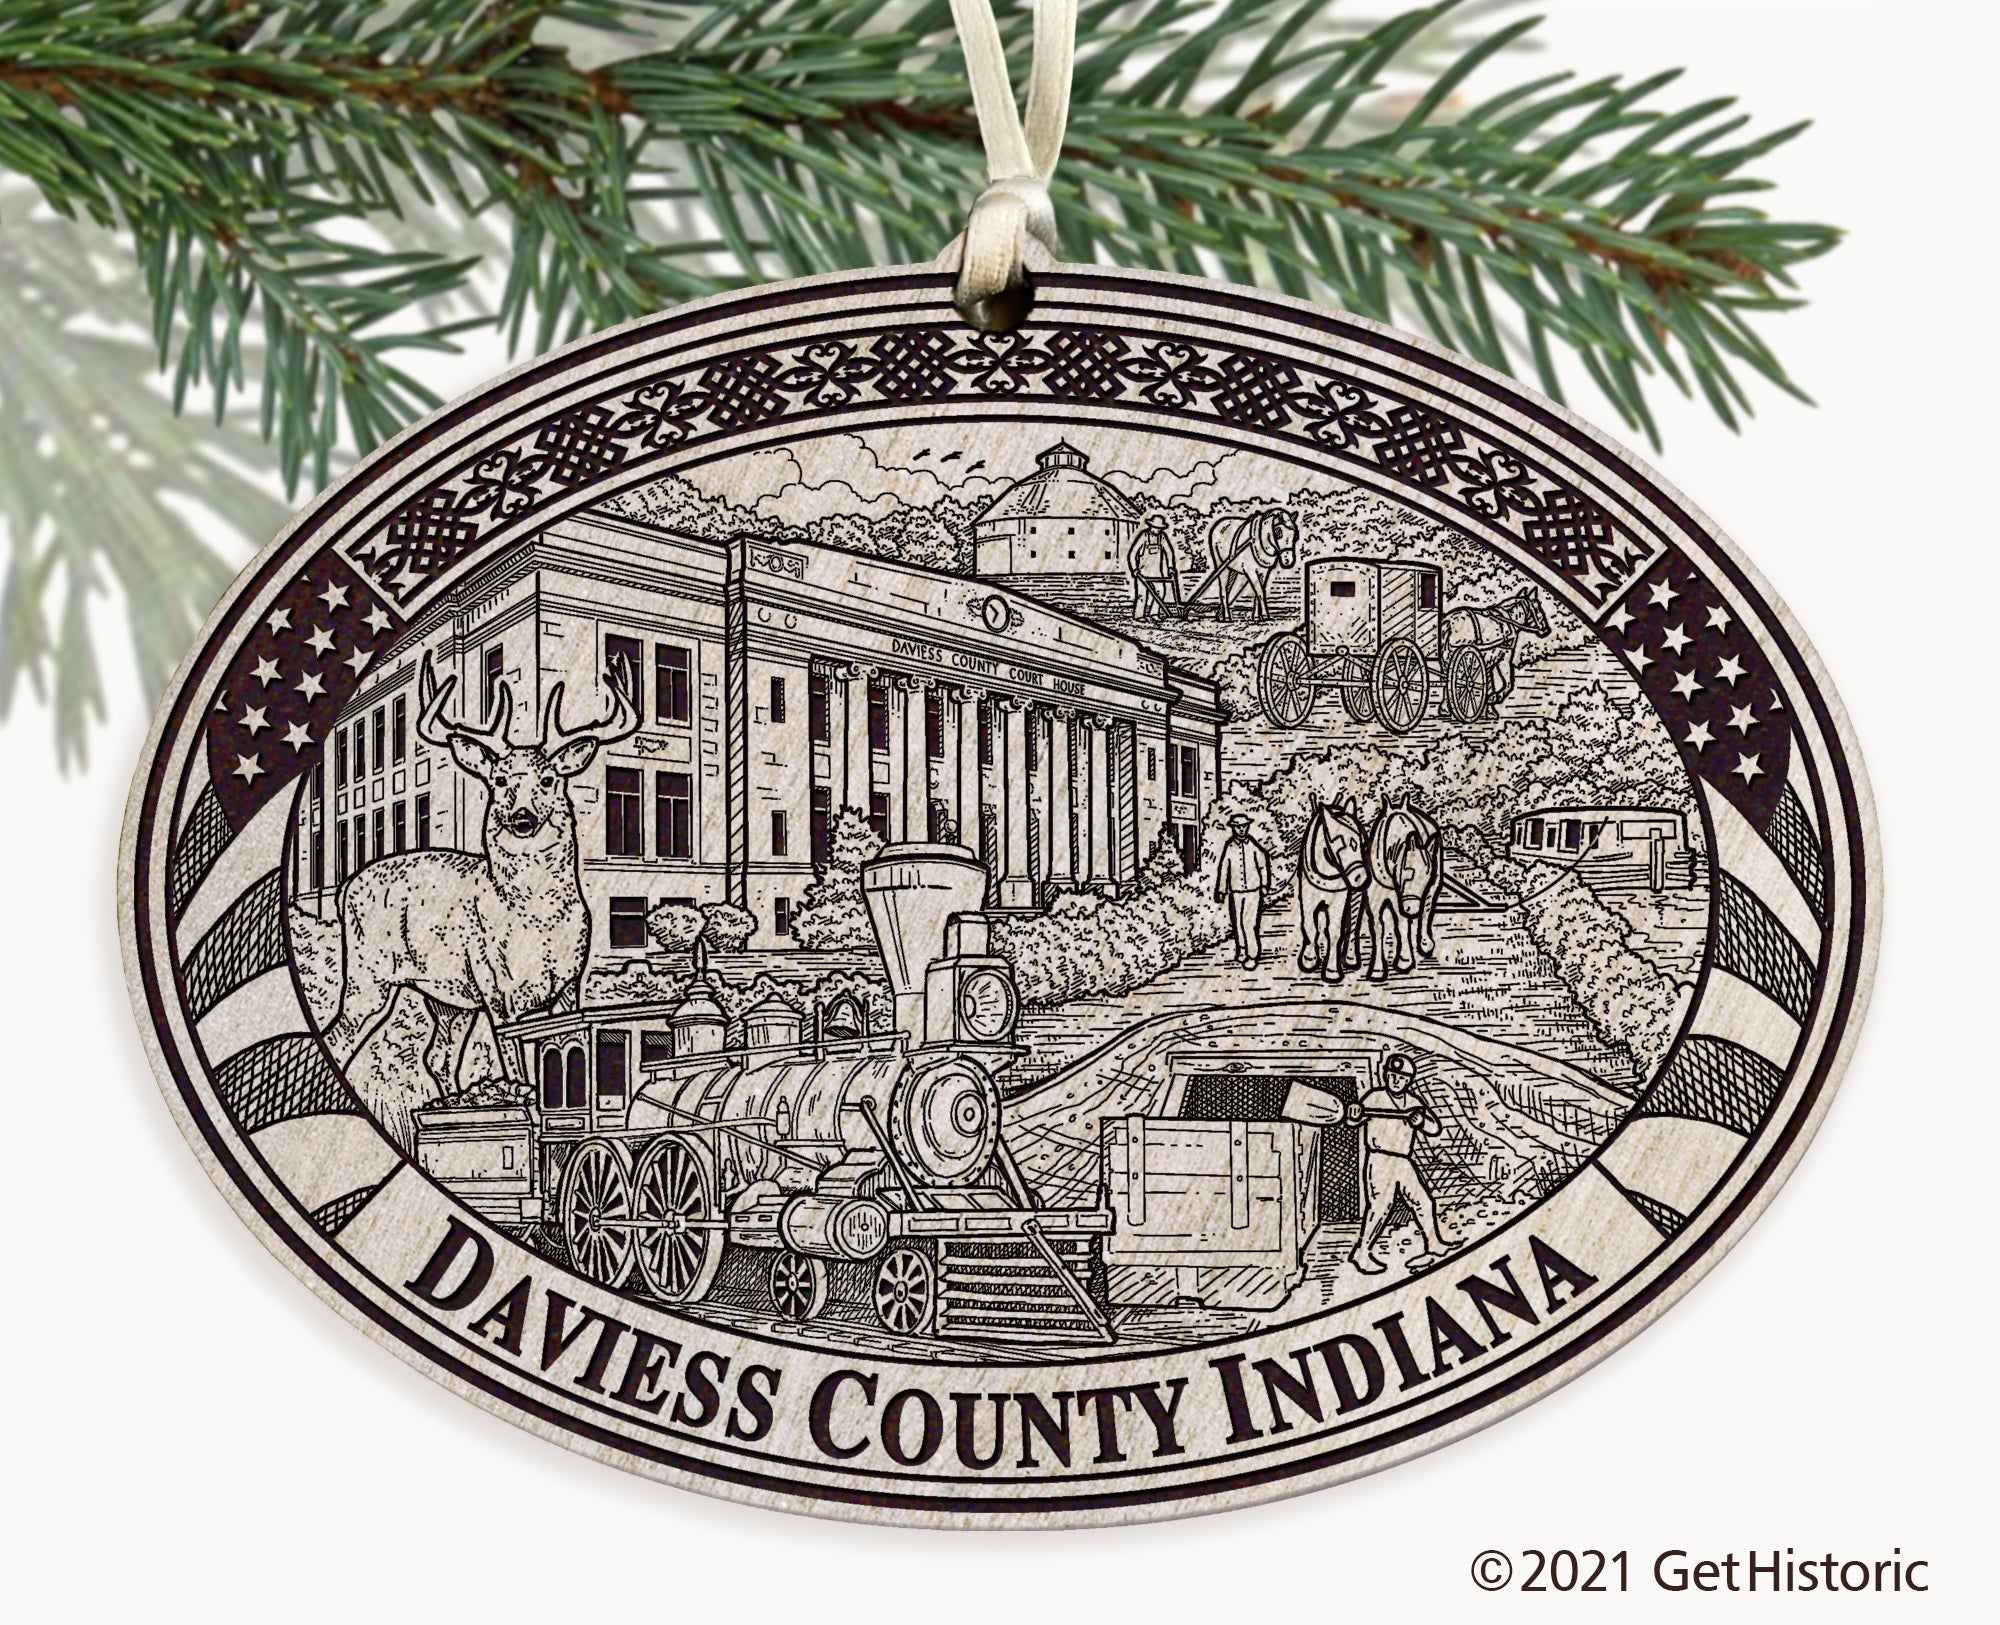 Daviess County Indiana Whitewash Wood Engraved Ornament